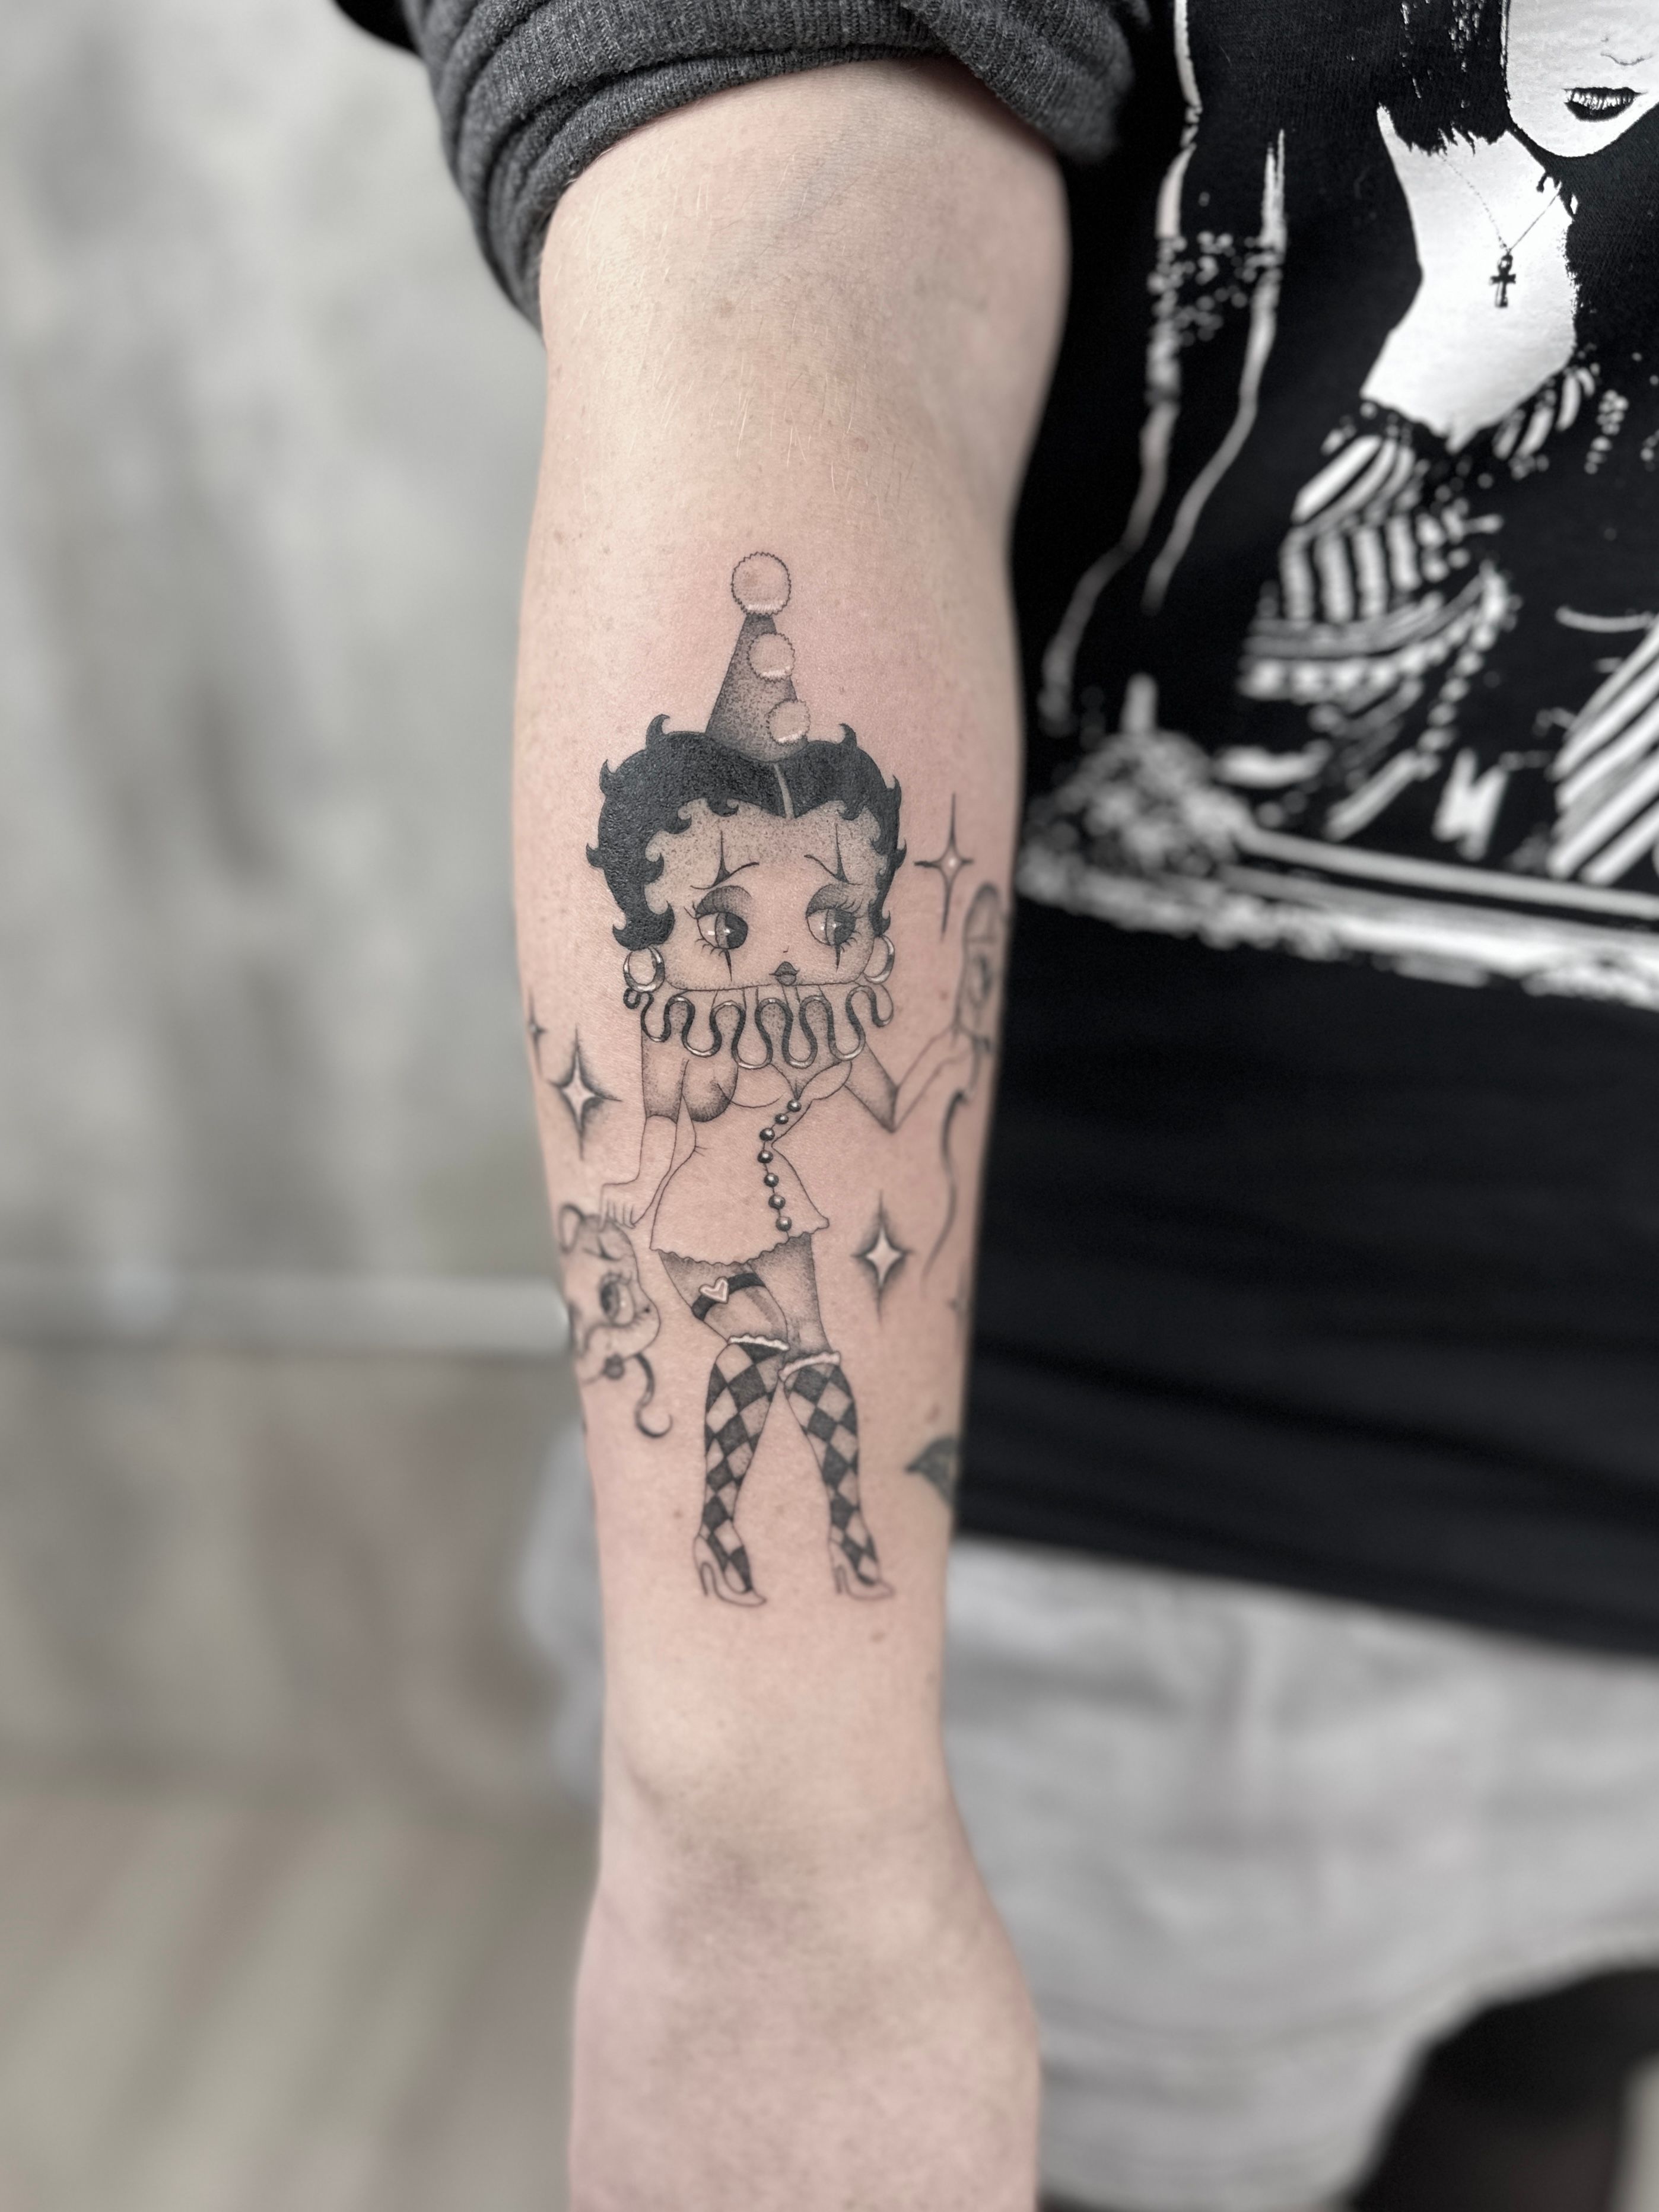 Friends Betty Boop tattoo by Ratsathome on DeviantArt